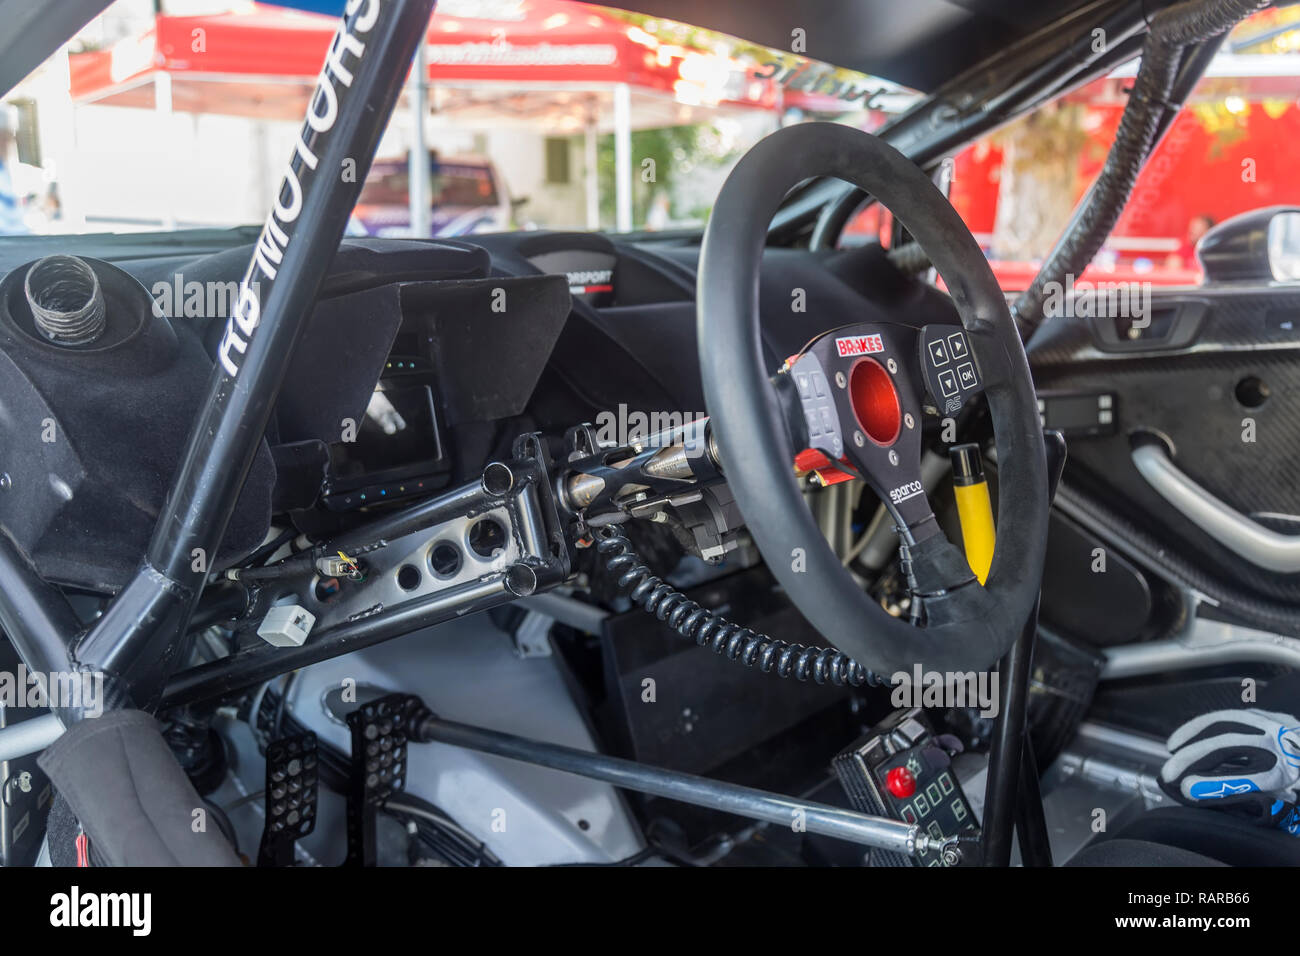 BUZET, KROATIEN - 16. SEPTEMBER 2018: Cockpit eines Sports Racing Car An europäischen Hill Climb Championship in Buzet, Kroatien. Stockfoto